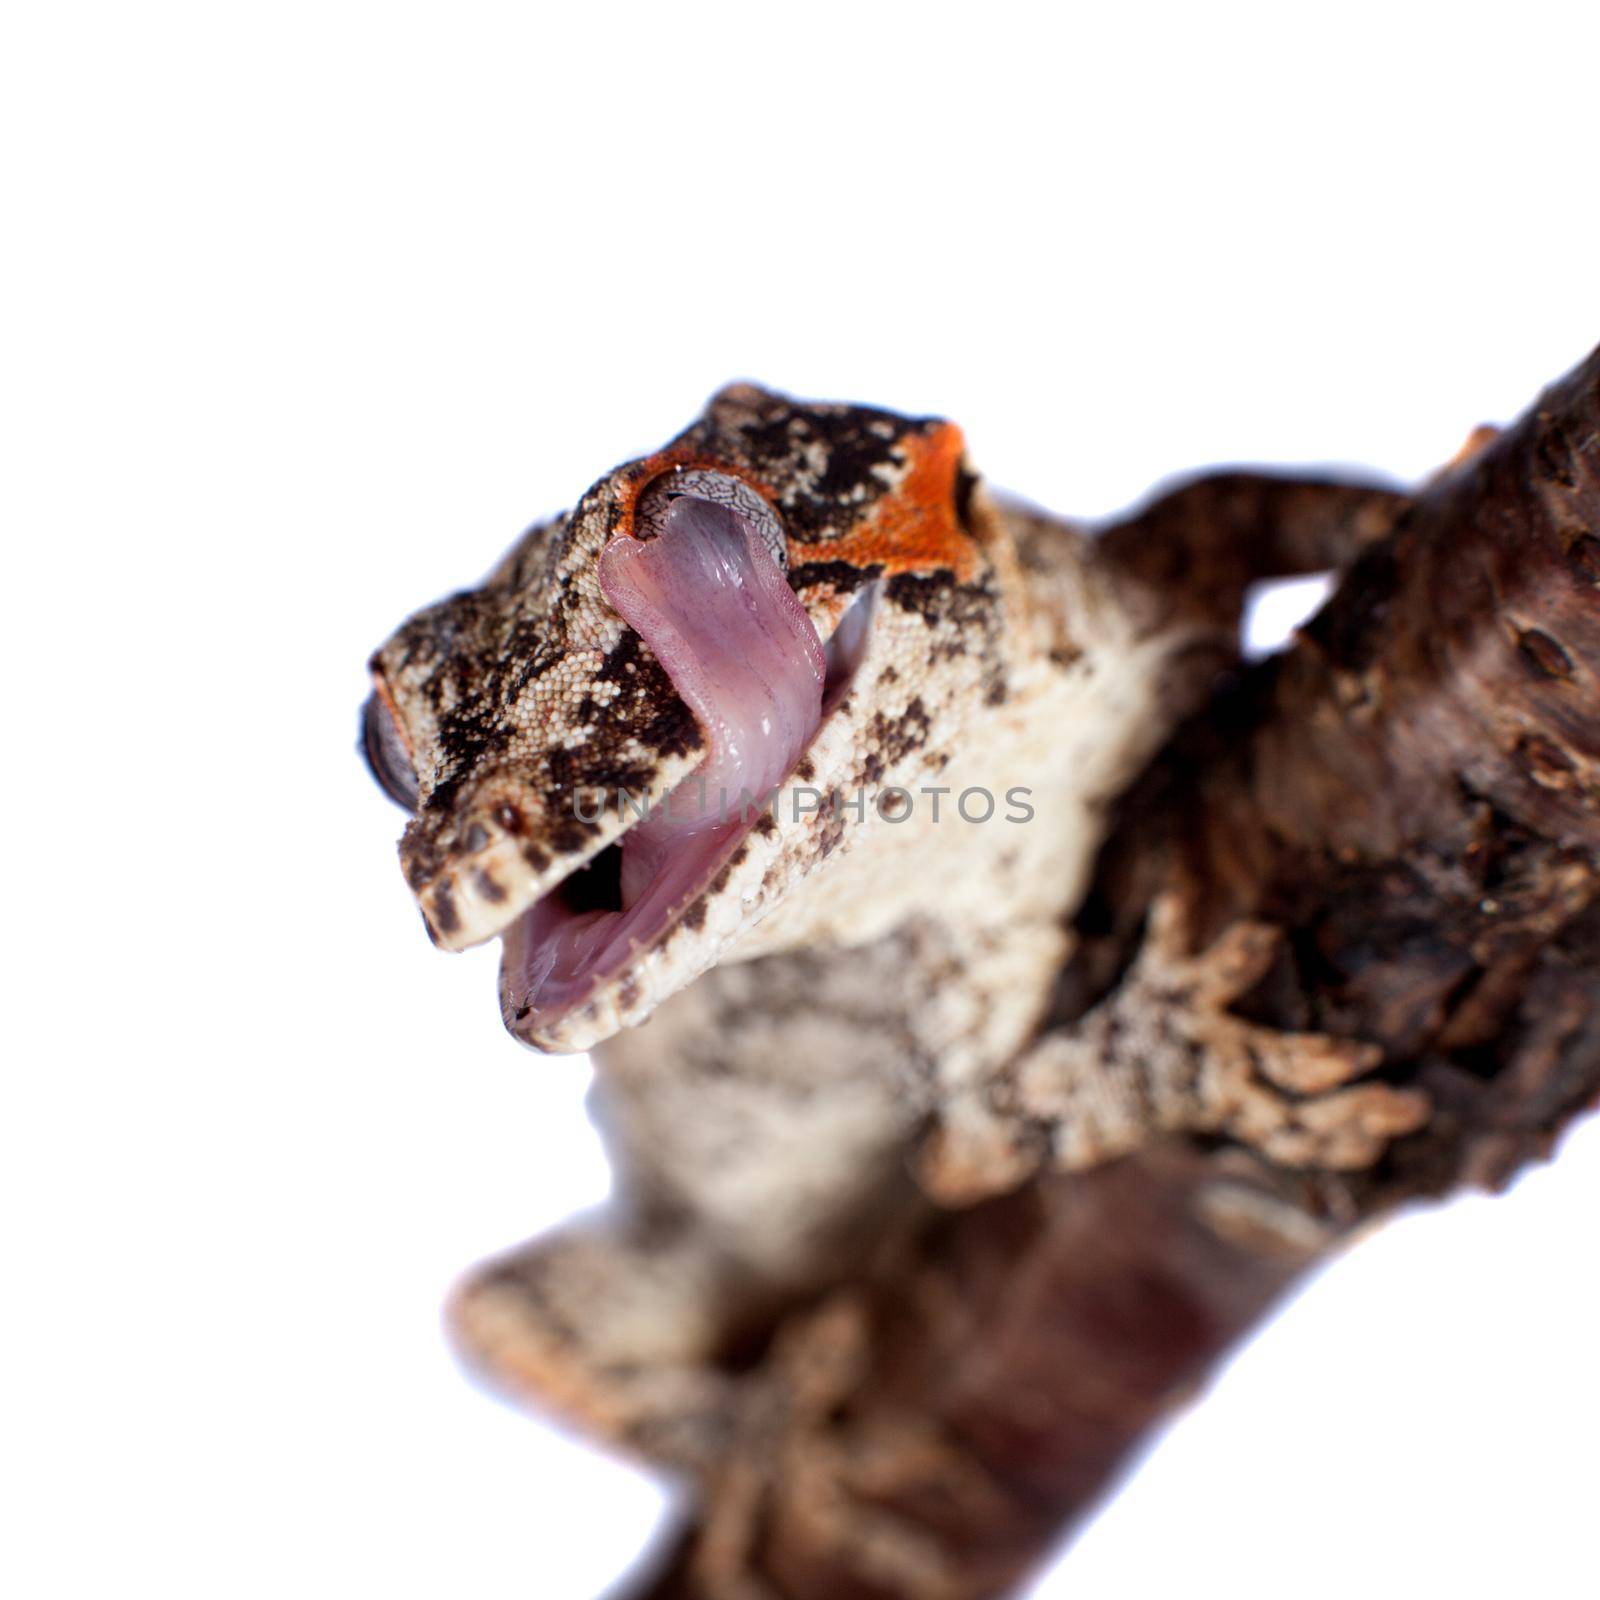 The gargoyle or New Caledonian bumpy gecko, Rhacodactylus auriculatus isolated on white